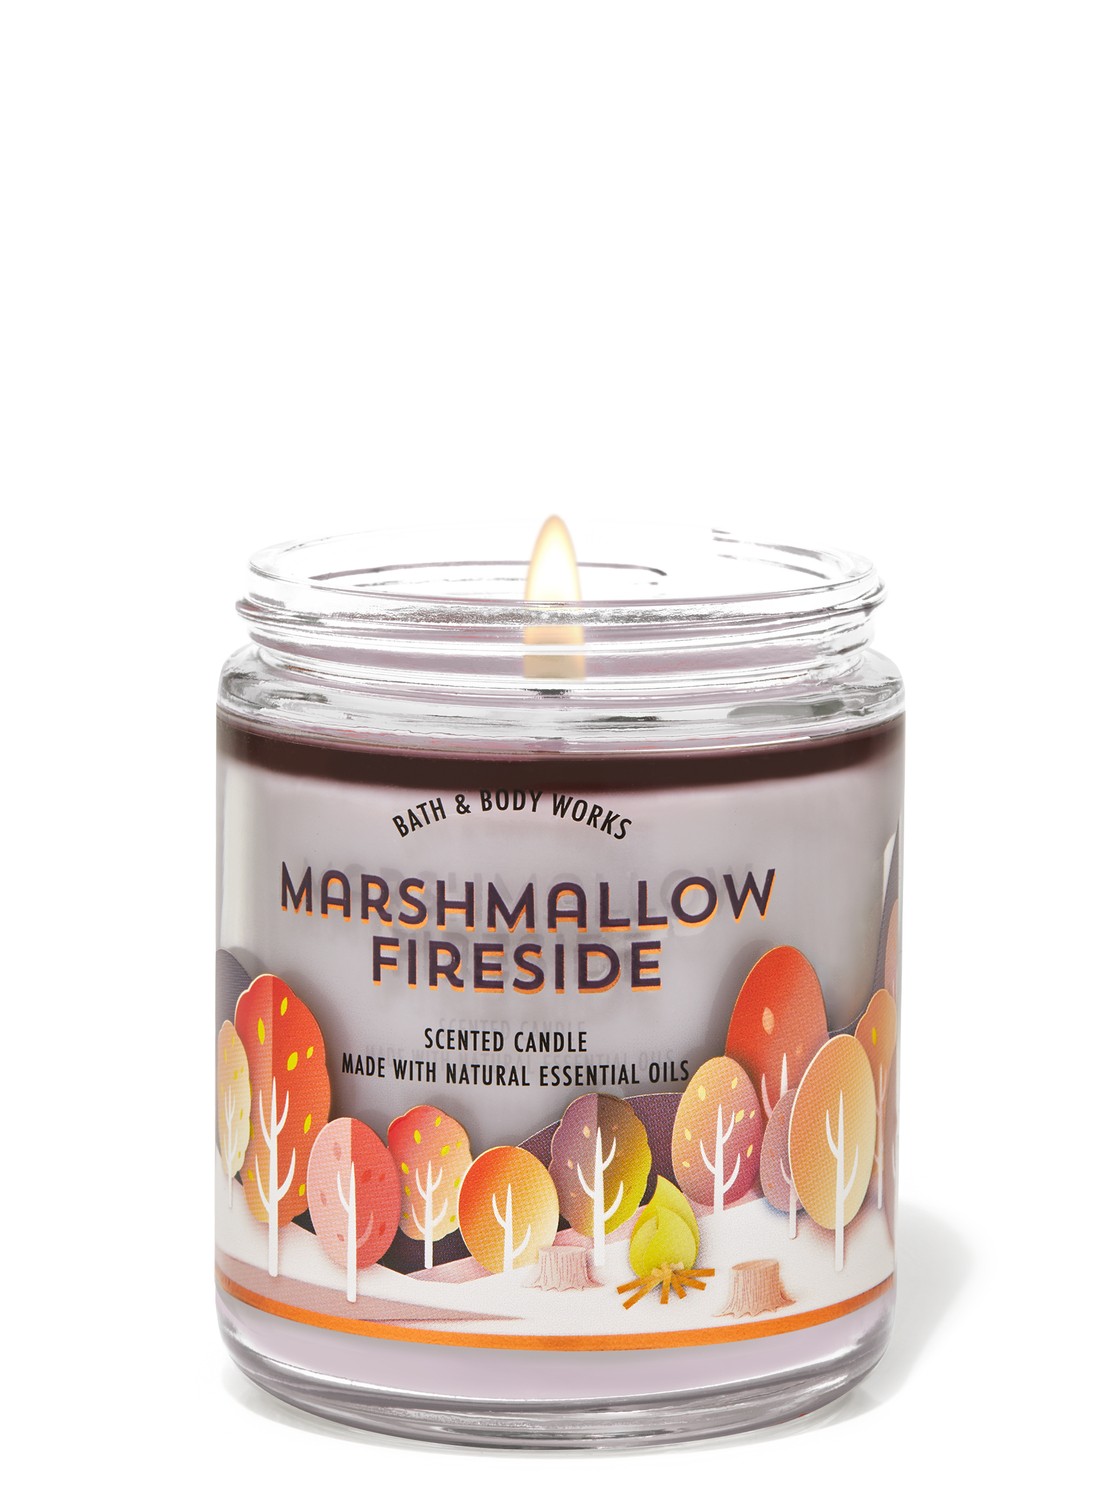 Buy Marshmallow Fireside Online | Bath & Body Works Australia Official Site